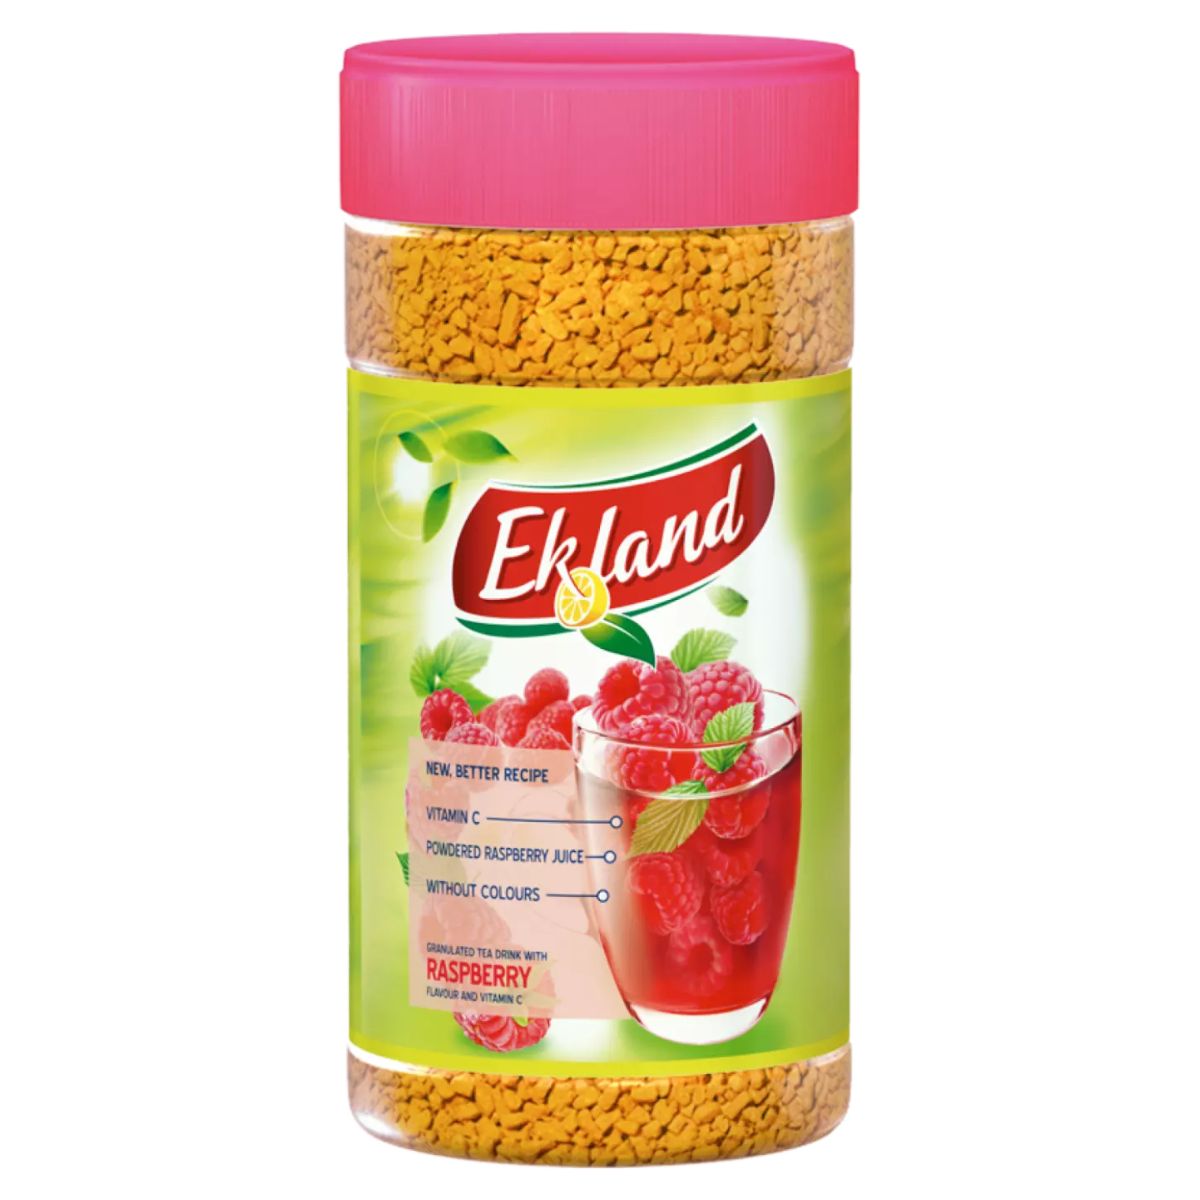 A jar of Ekoland raspberry powder.